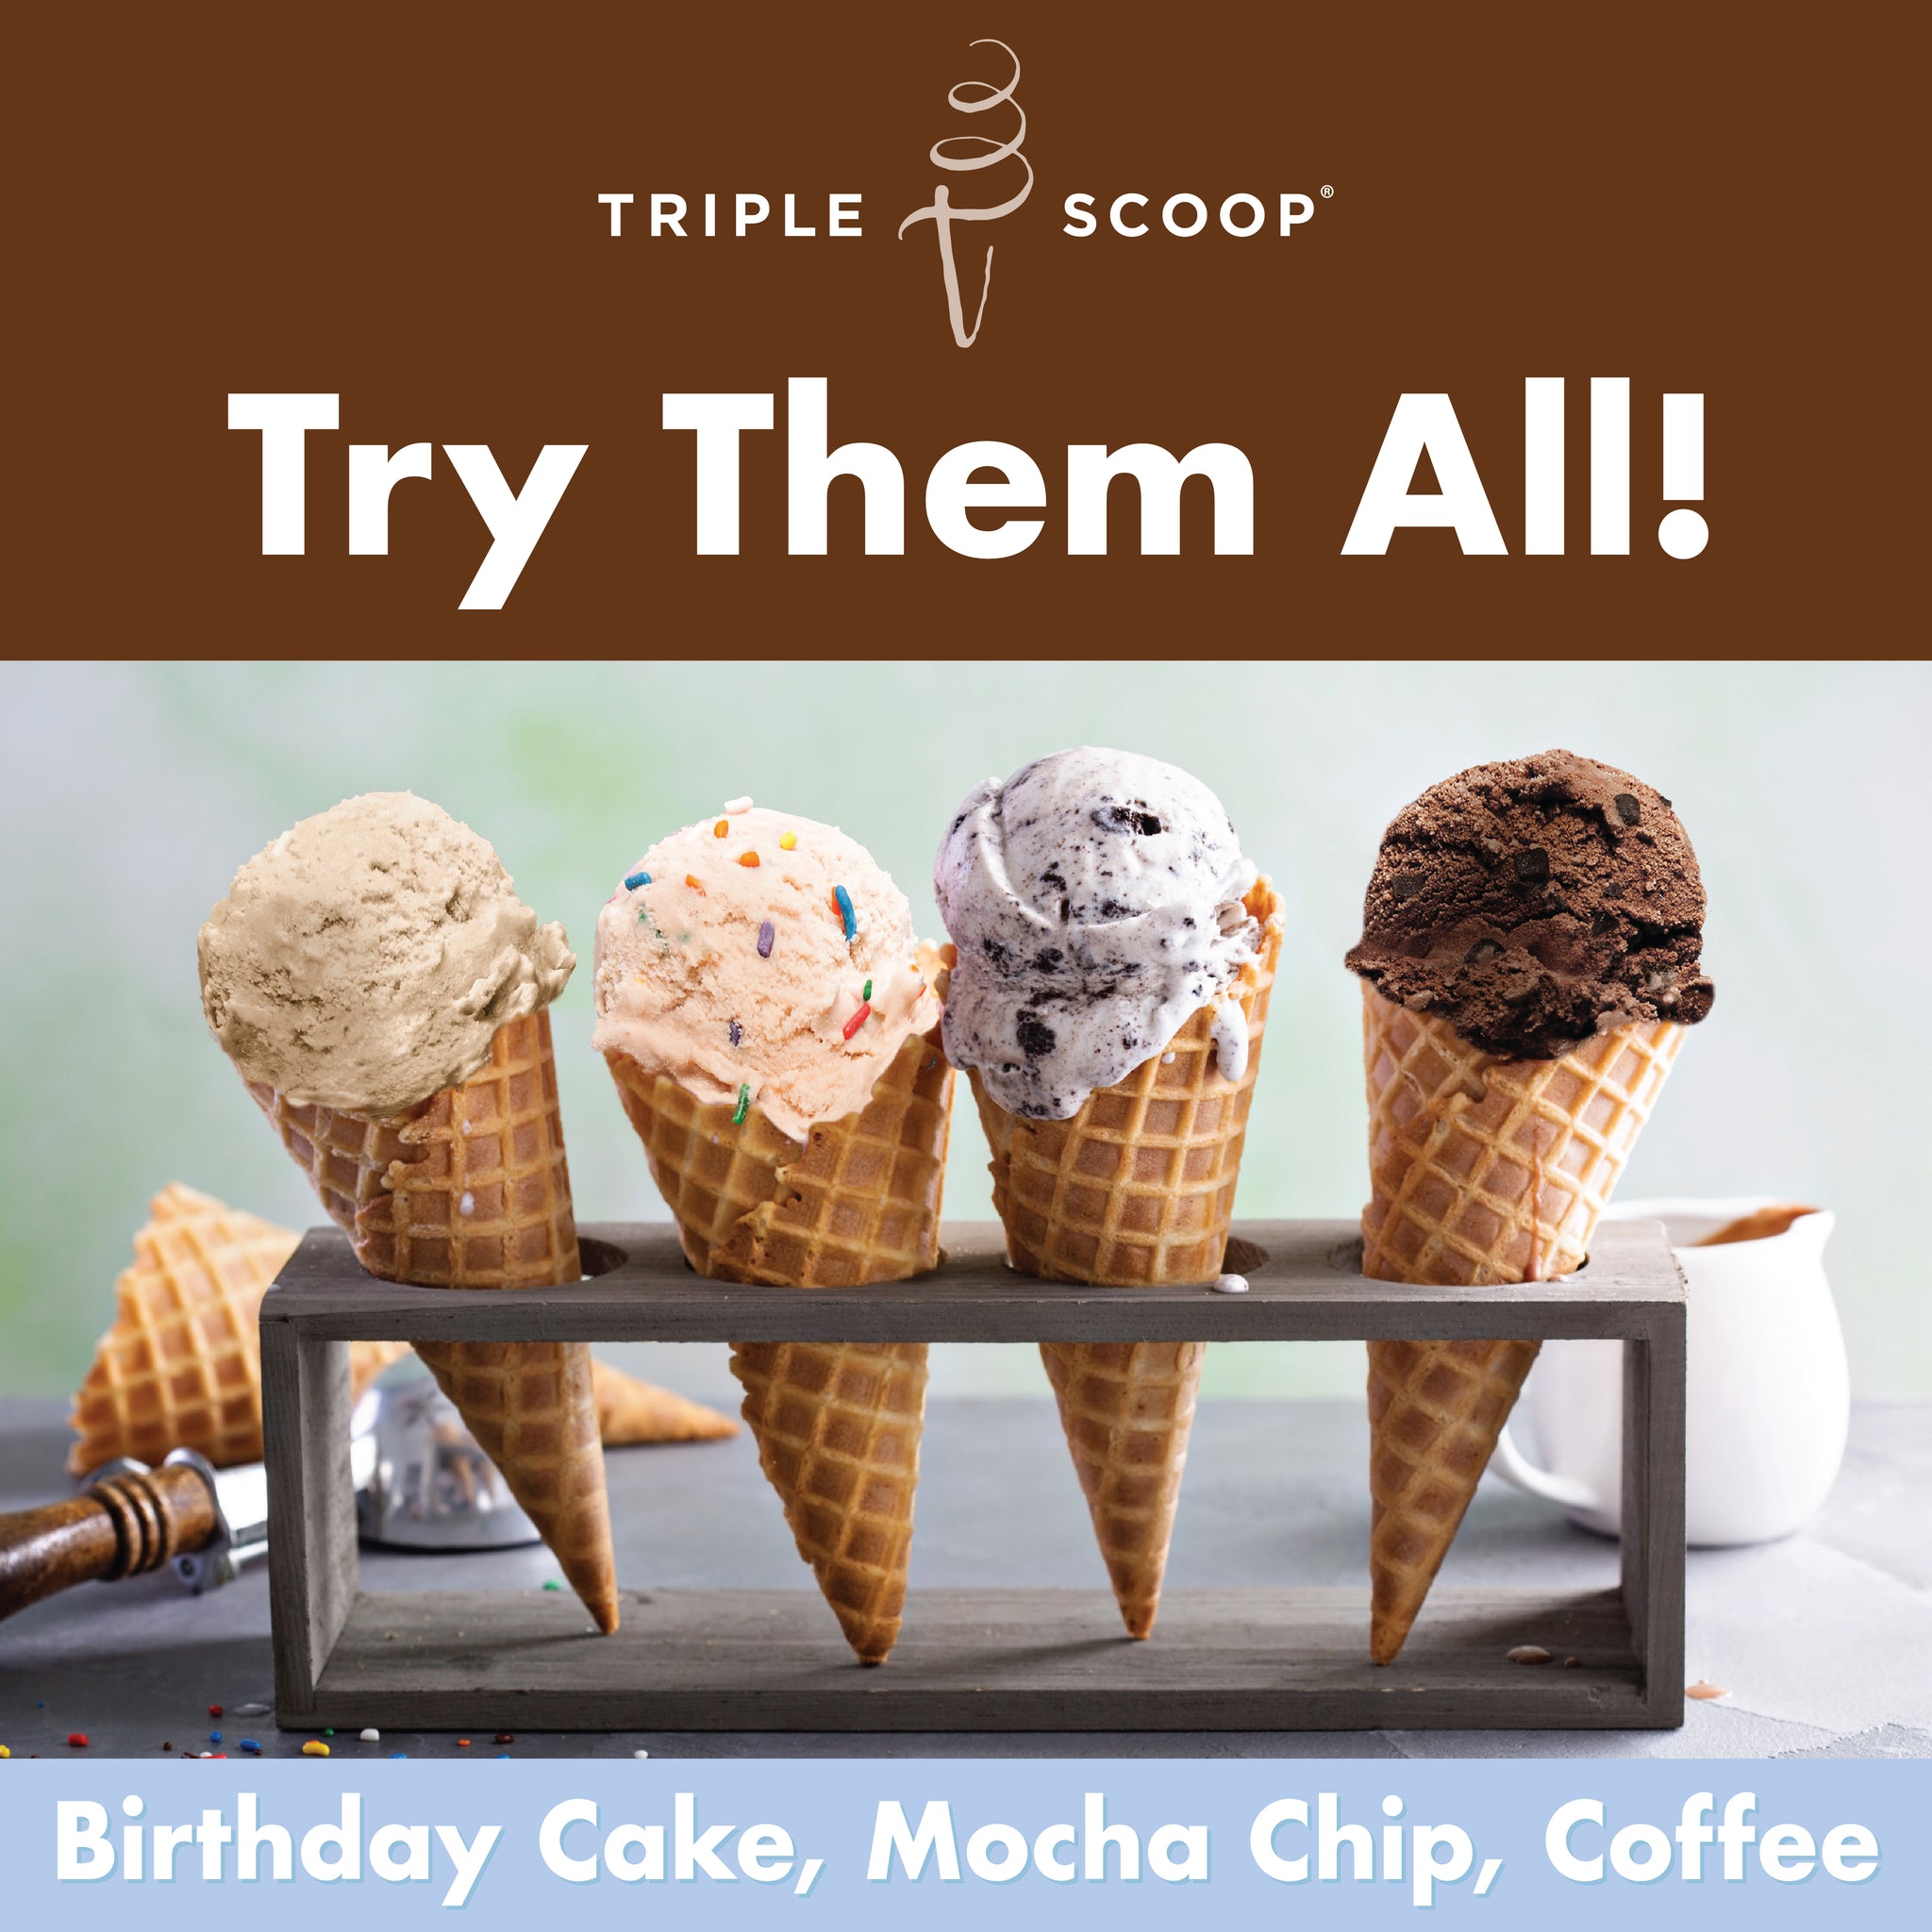 Triple Scoop Birthday Cake 